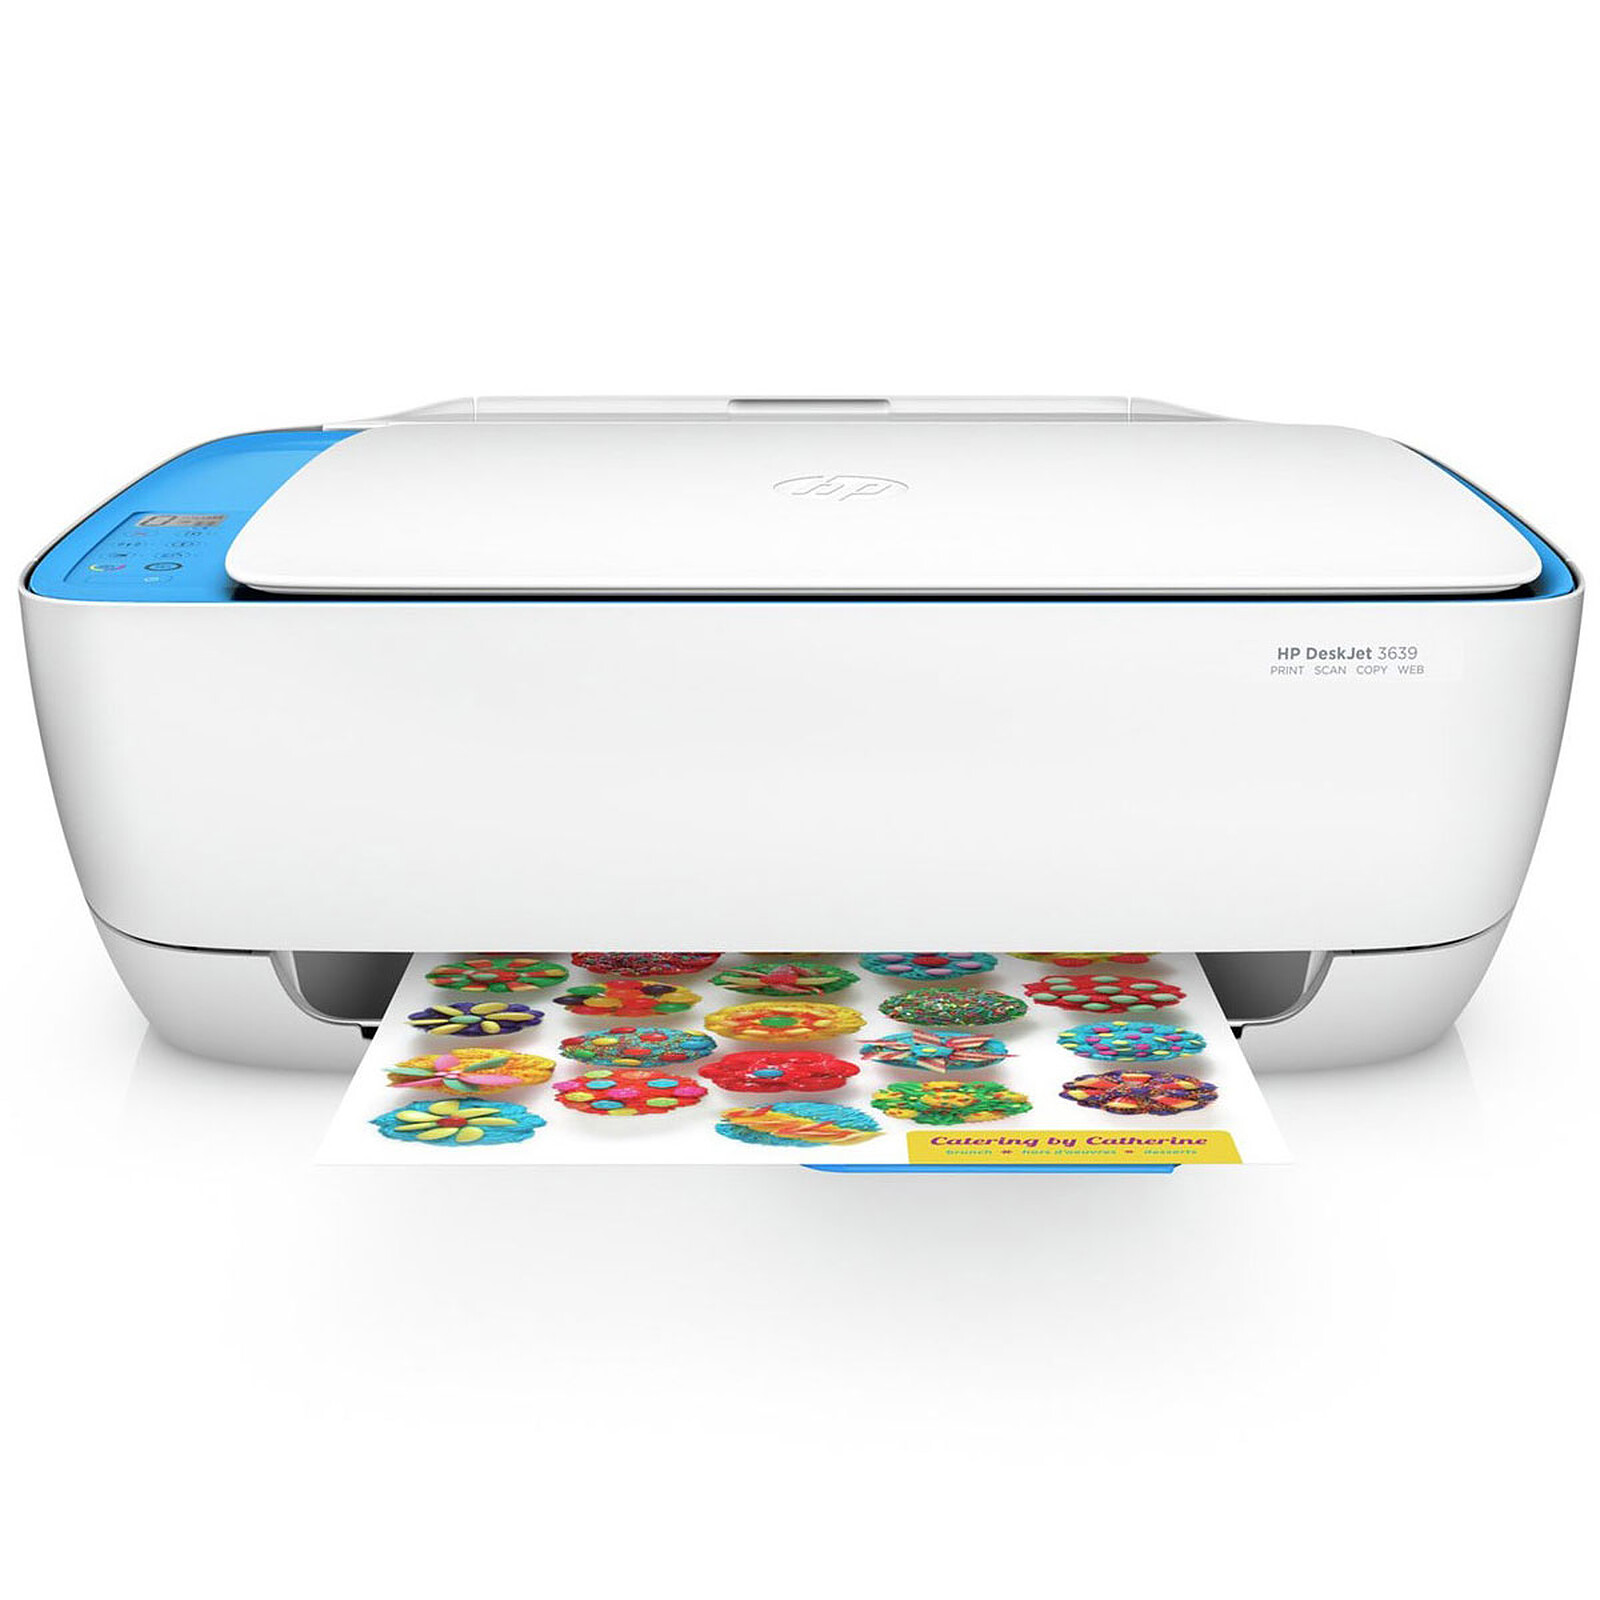 HP DeskJet 3639 - Imprimante multifonction - Garantie 3 ans LDLC